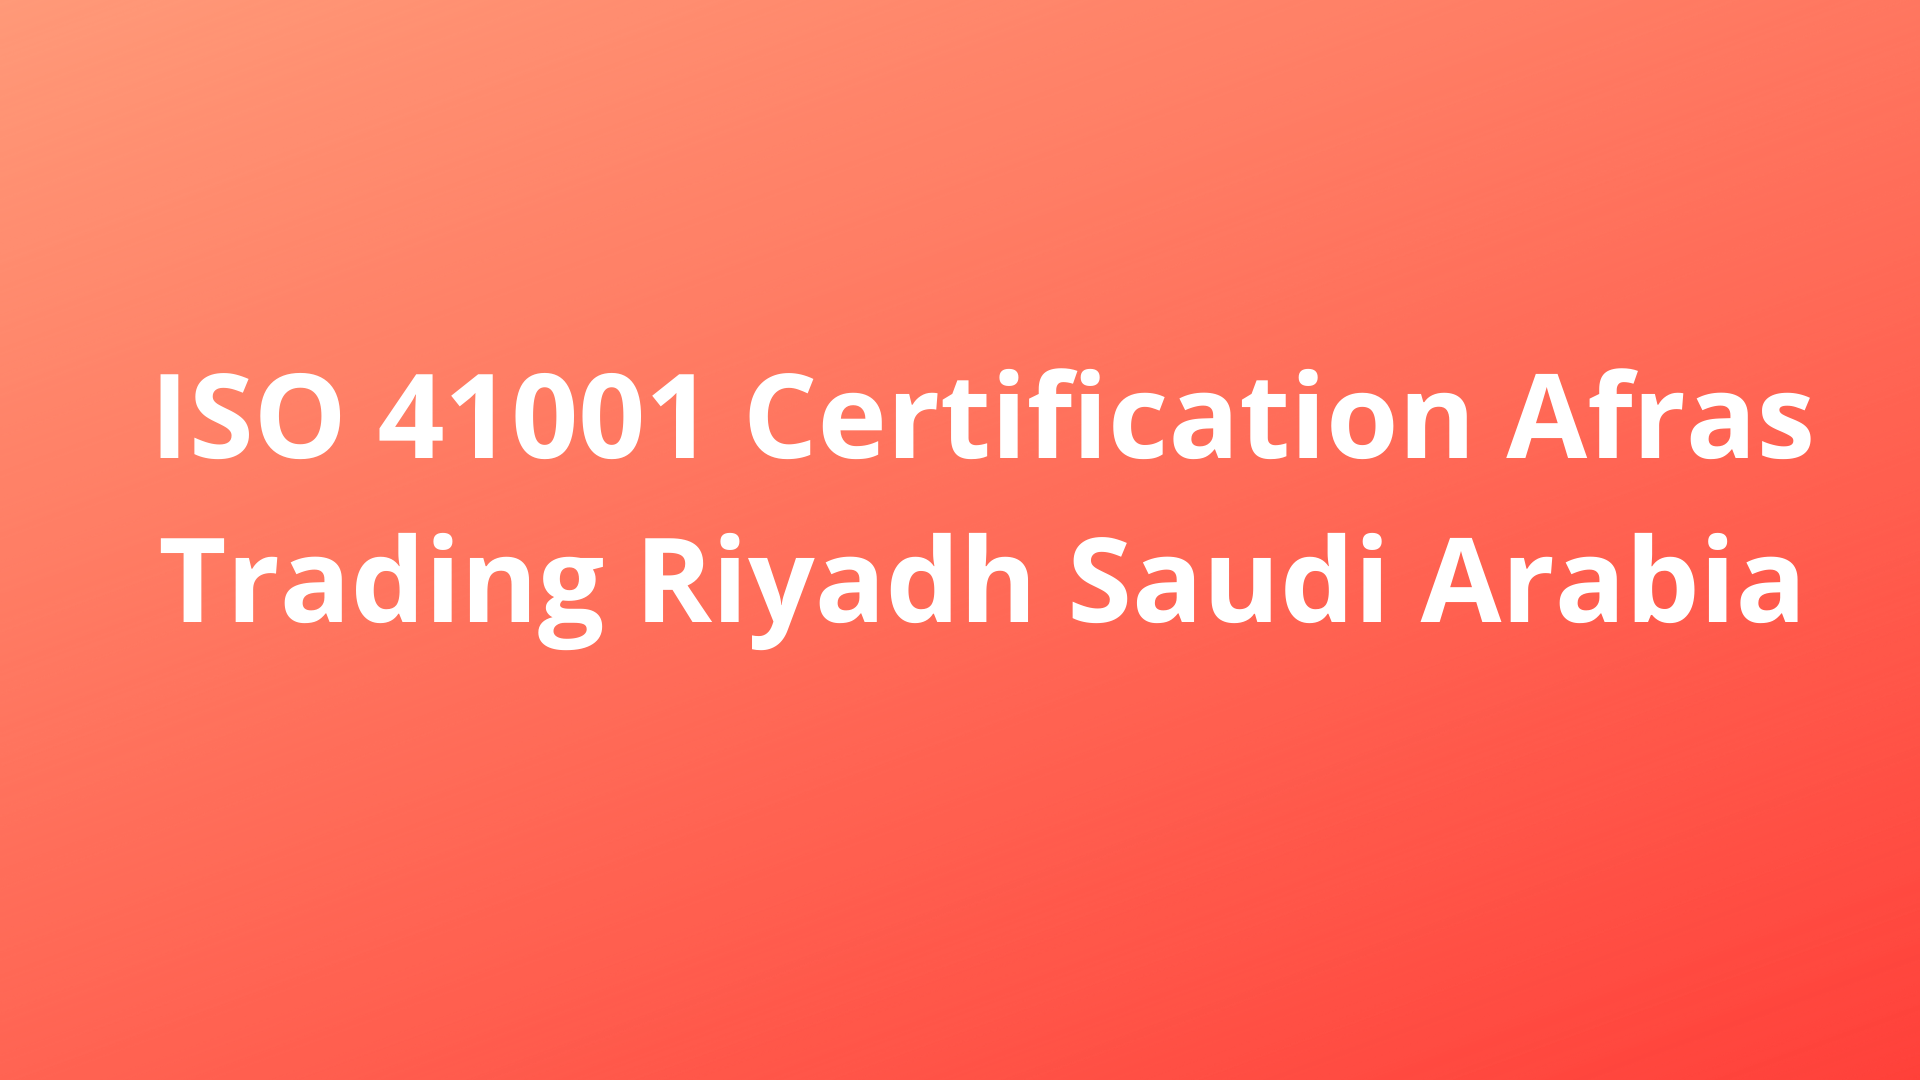 ISO 41001 Certification Afras Trading Riyadh Saudi Arabia